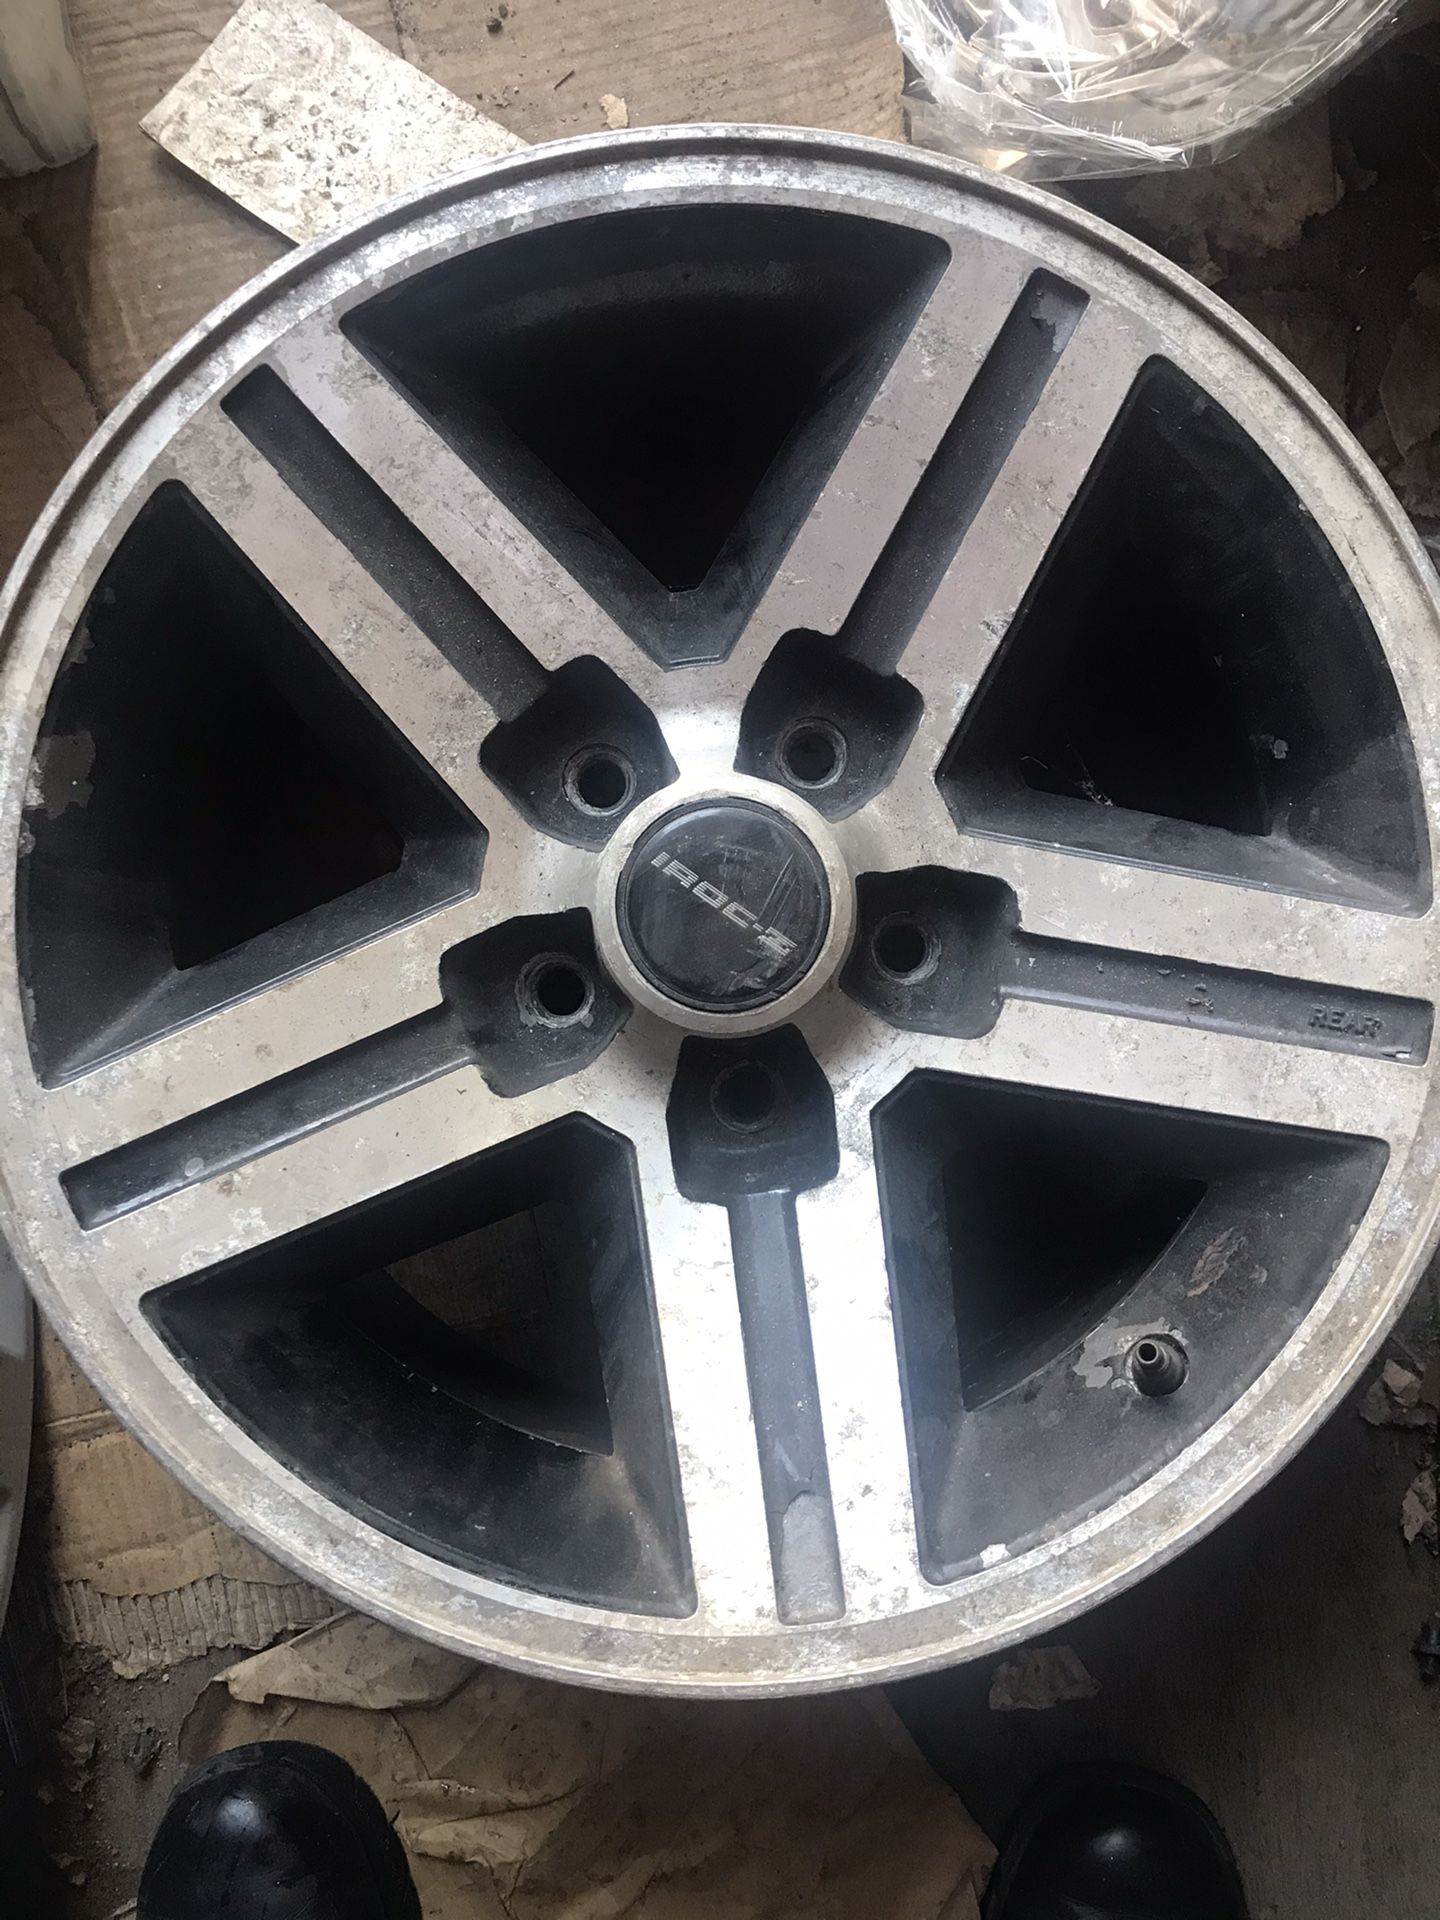 Chevy camaro Iroc z wheel 16” REAR only wheel Black